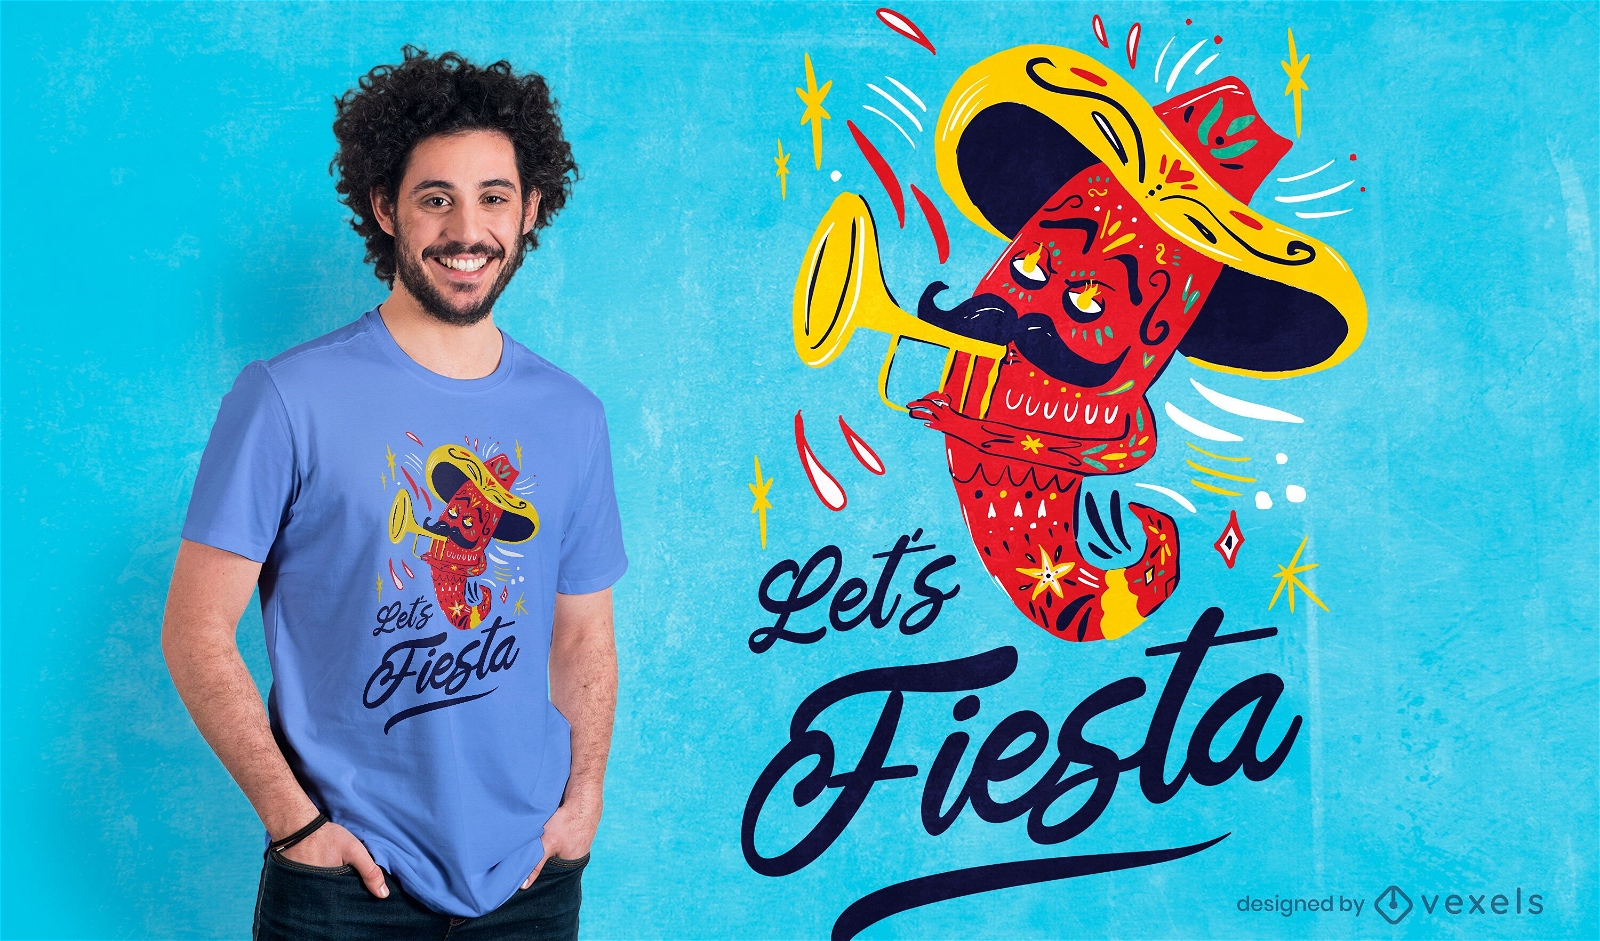 Mexikanische Party-T-Shirt-Design mit Chili-Pfeffer